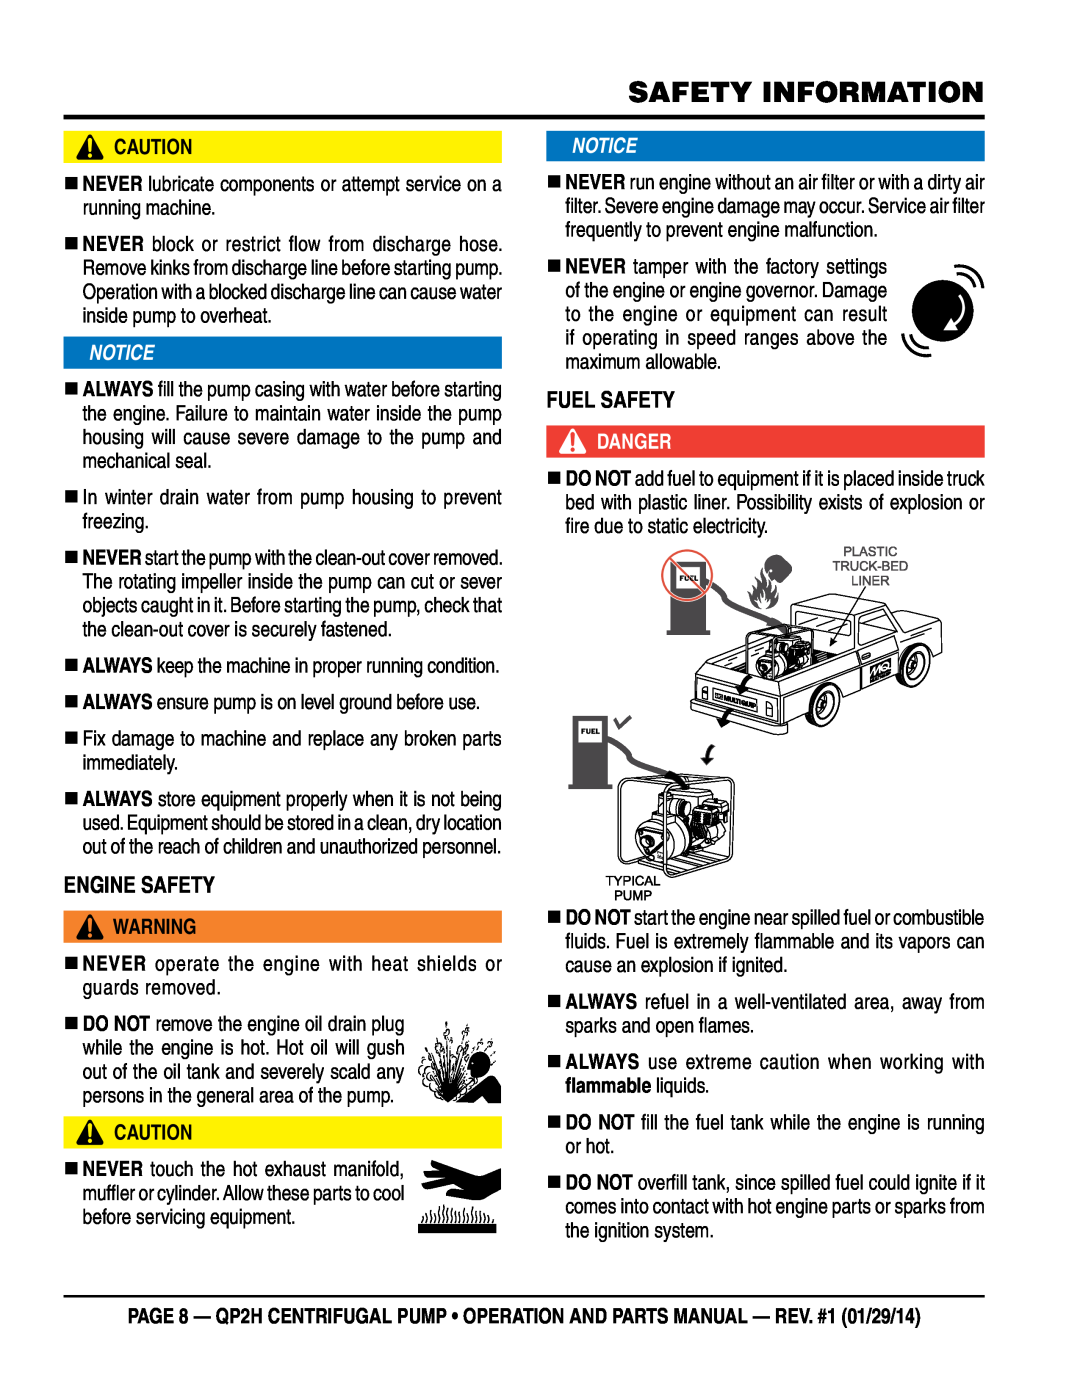 Multiquip QP2H manual Engine Safety, Fuel Safety, Safety Information, Notice, Danger 